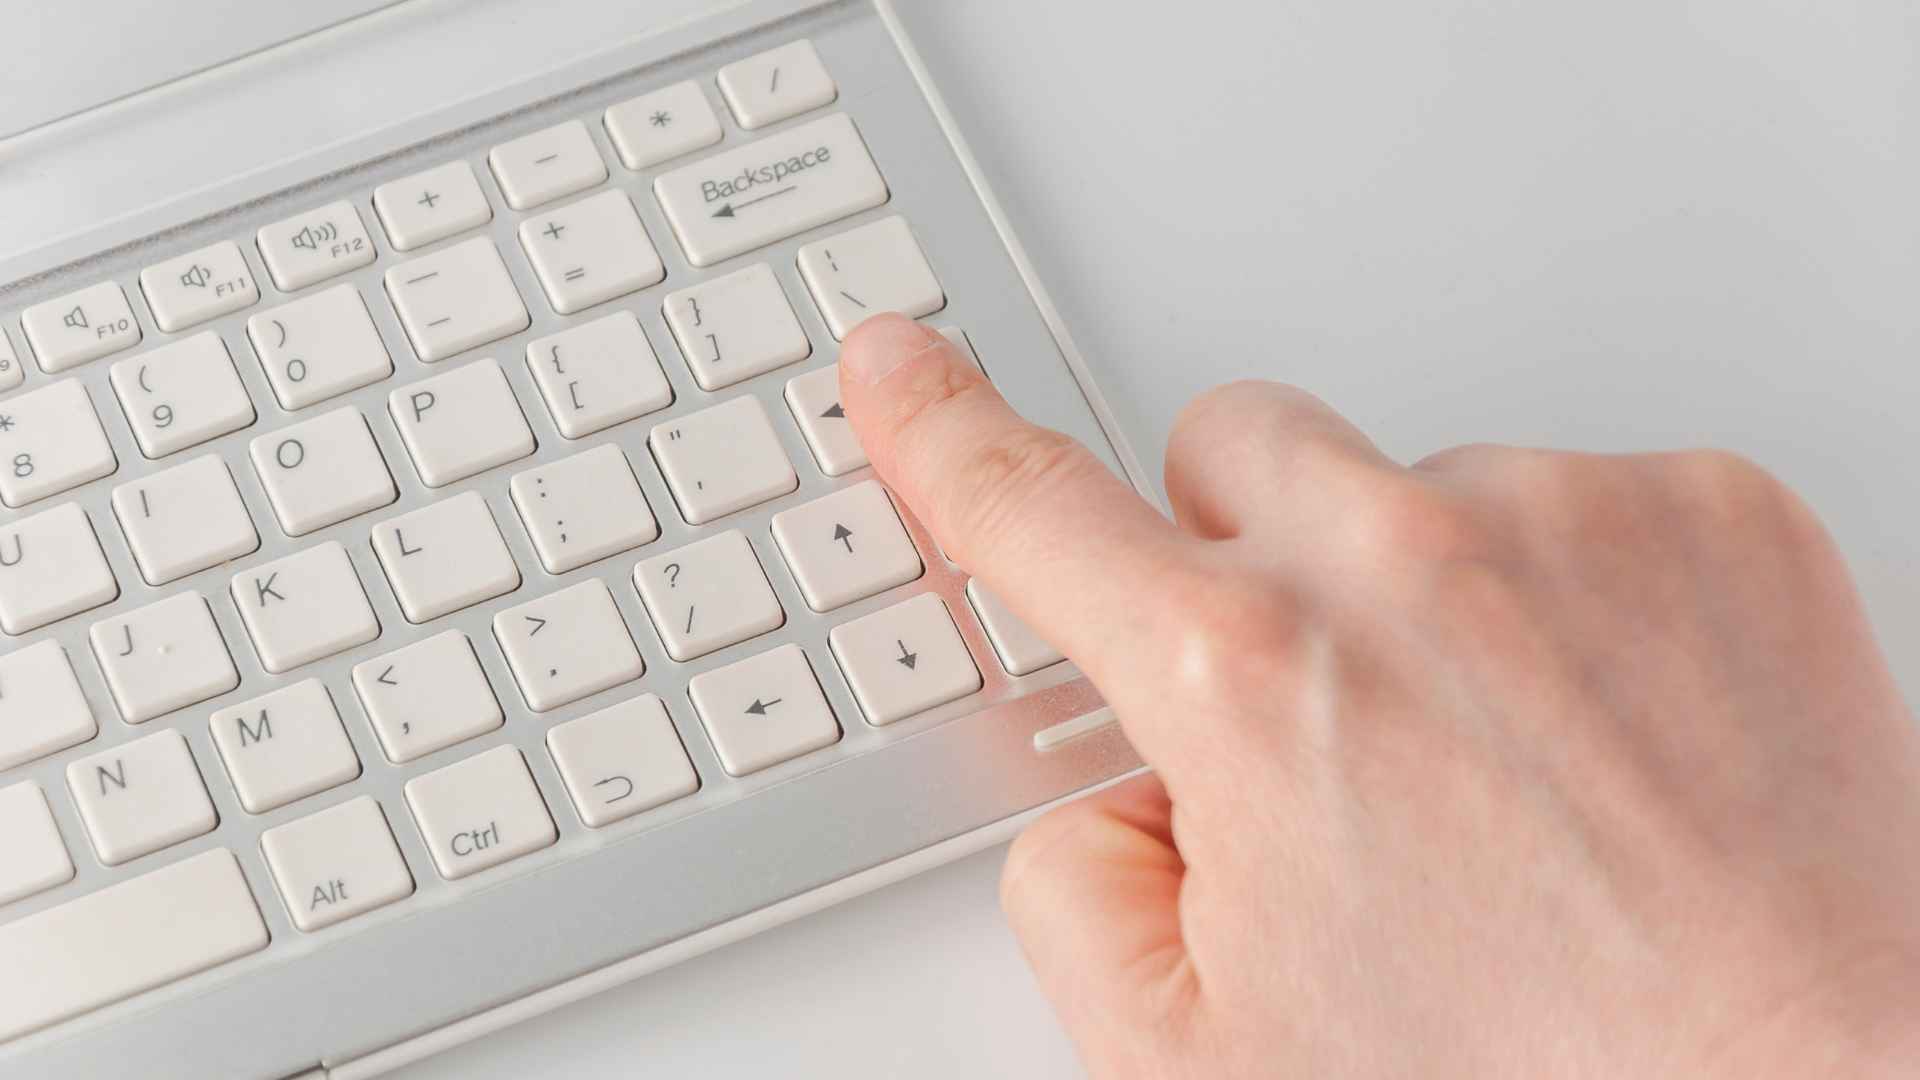 Finger pressing Enter on Keyboard - Nexacu